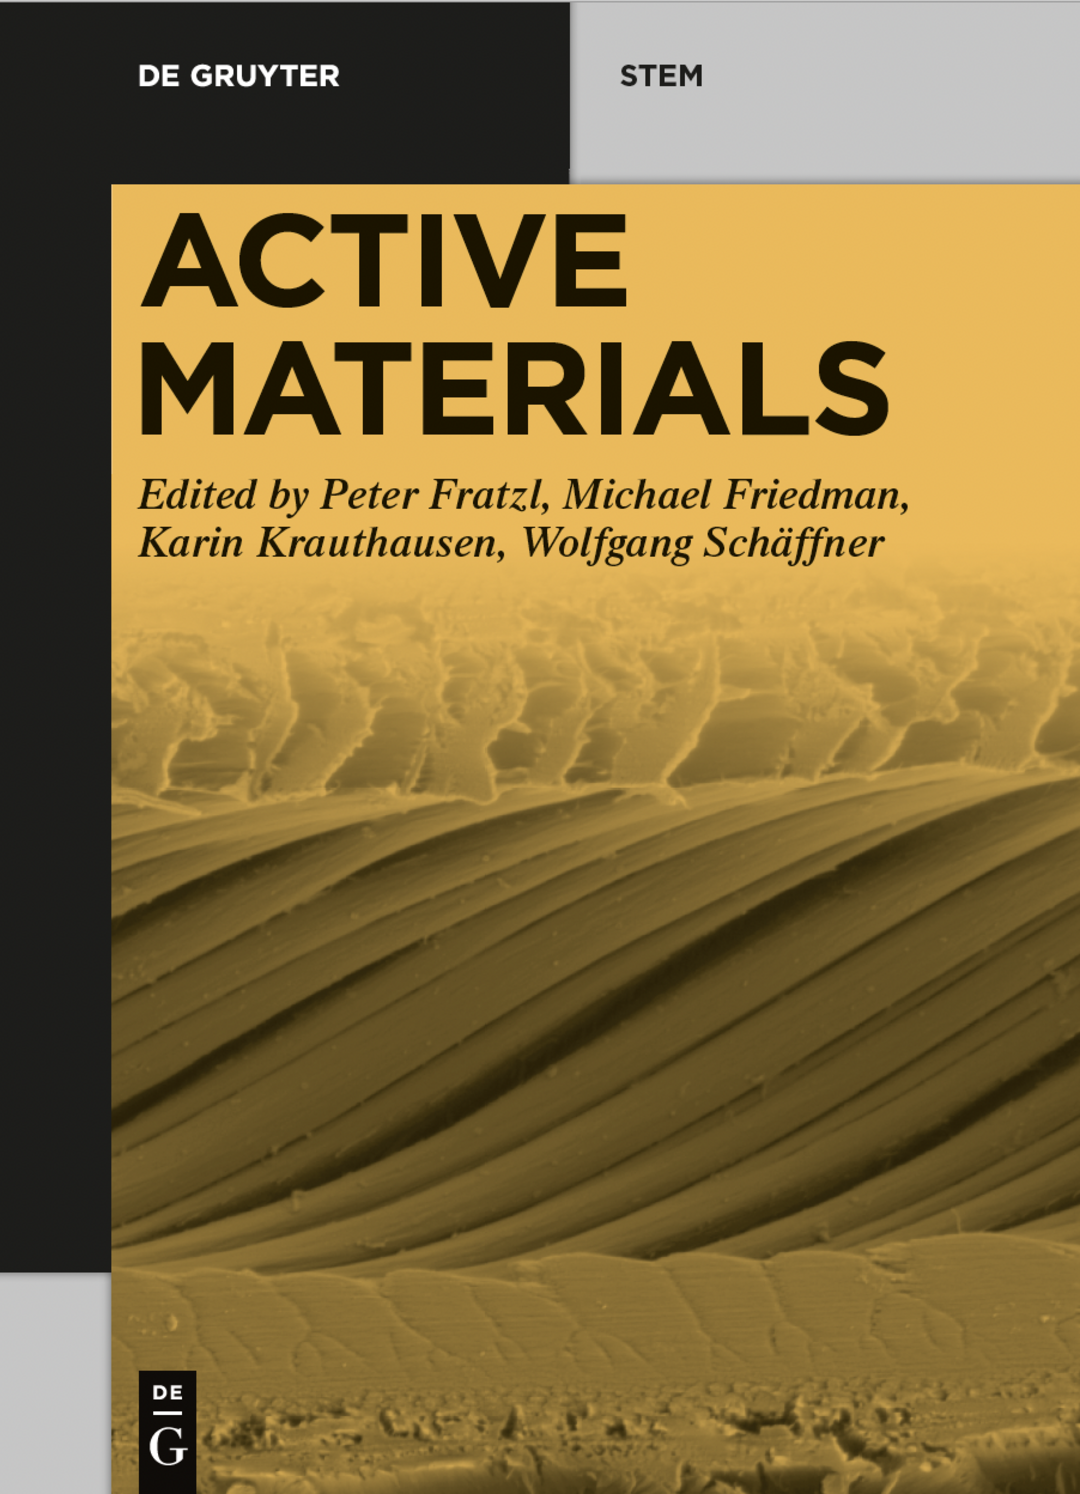 Cover of publication »Active Materials«, edited by: Peter Fratzl, Michael Friedman, Karin Krauthausen and Wolfgang Schäffner. Published December 2021. Copyright: De Gruyter

 
